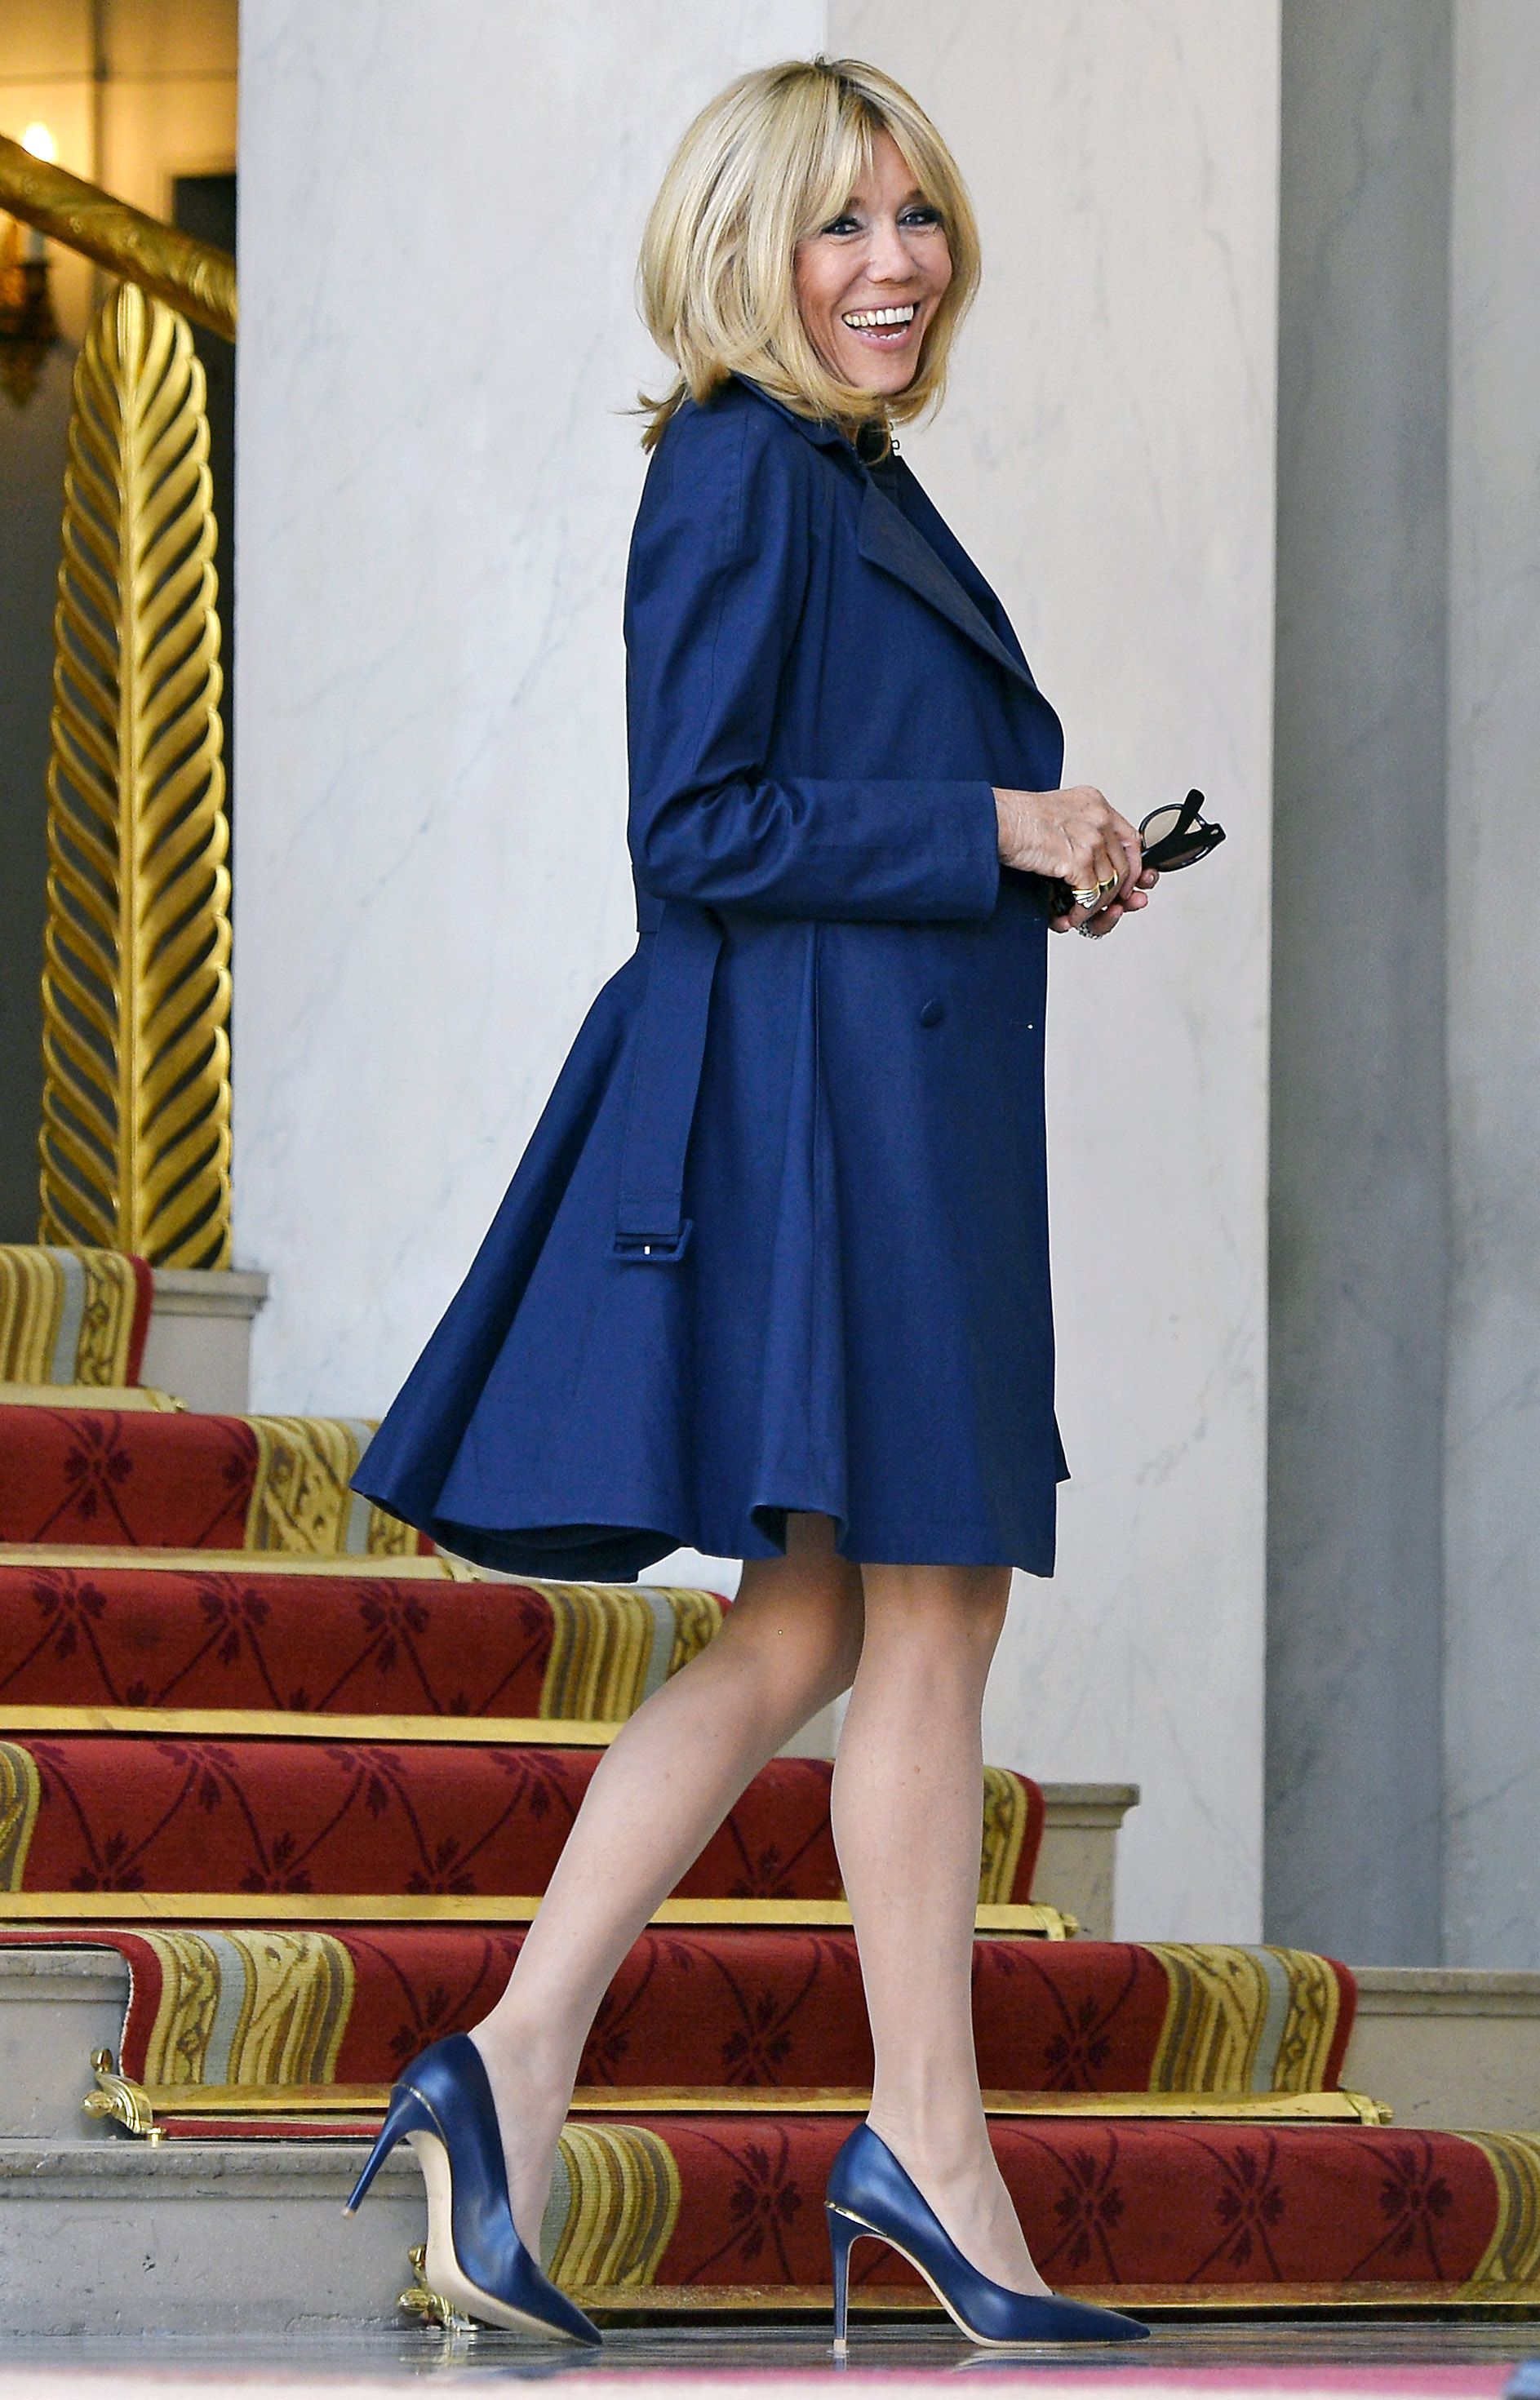 A close-up look at Brigitte Macrons Louis Vuitton heels